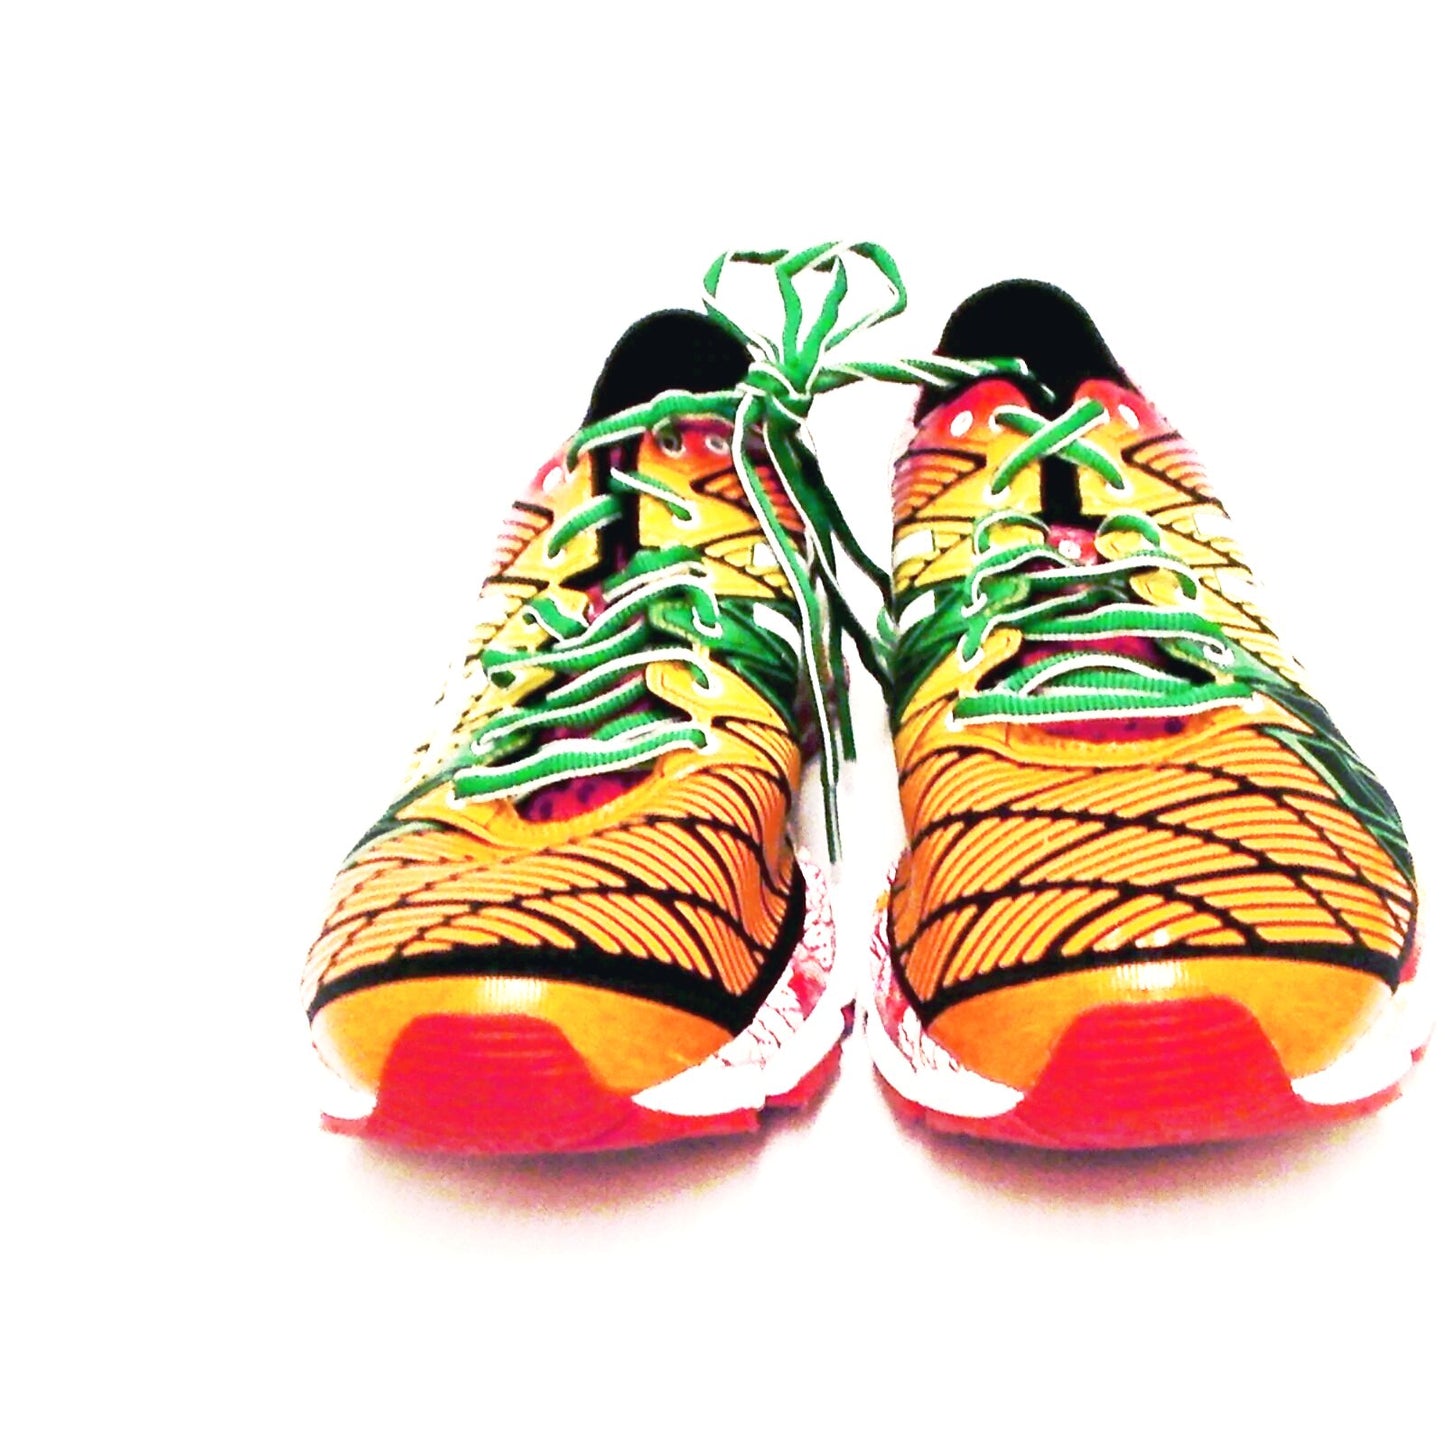 Men's Asics running shoes GEL-KINSEI 5 multi color size 10 us